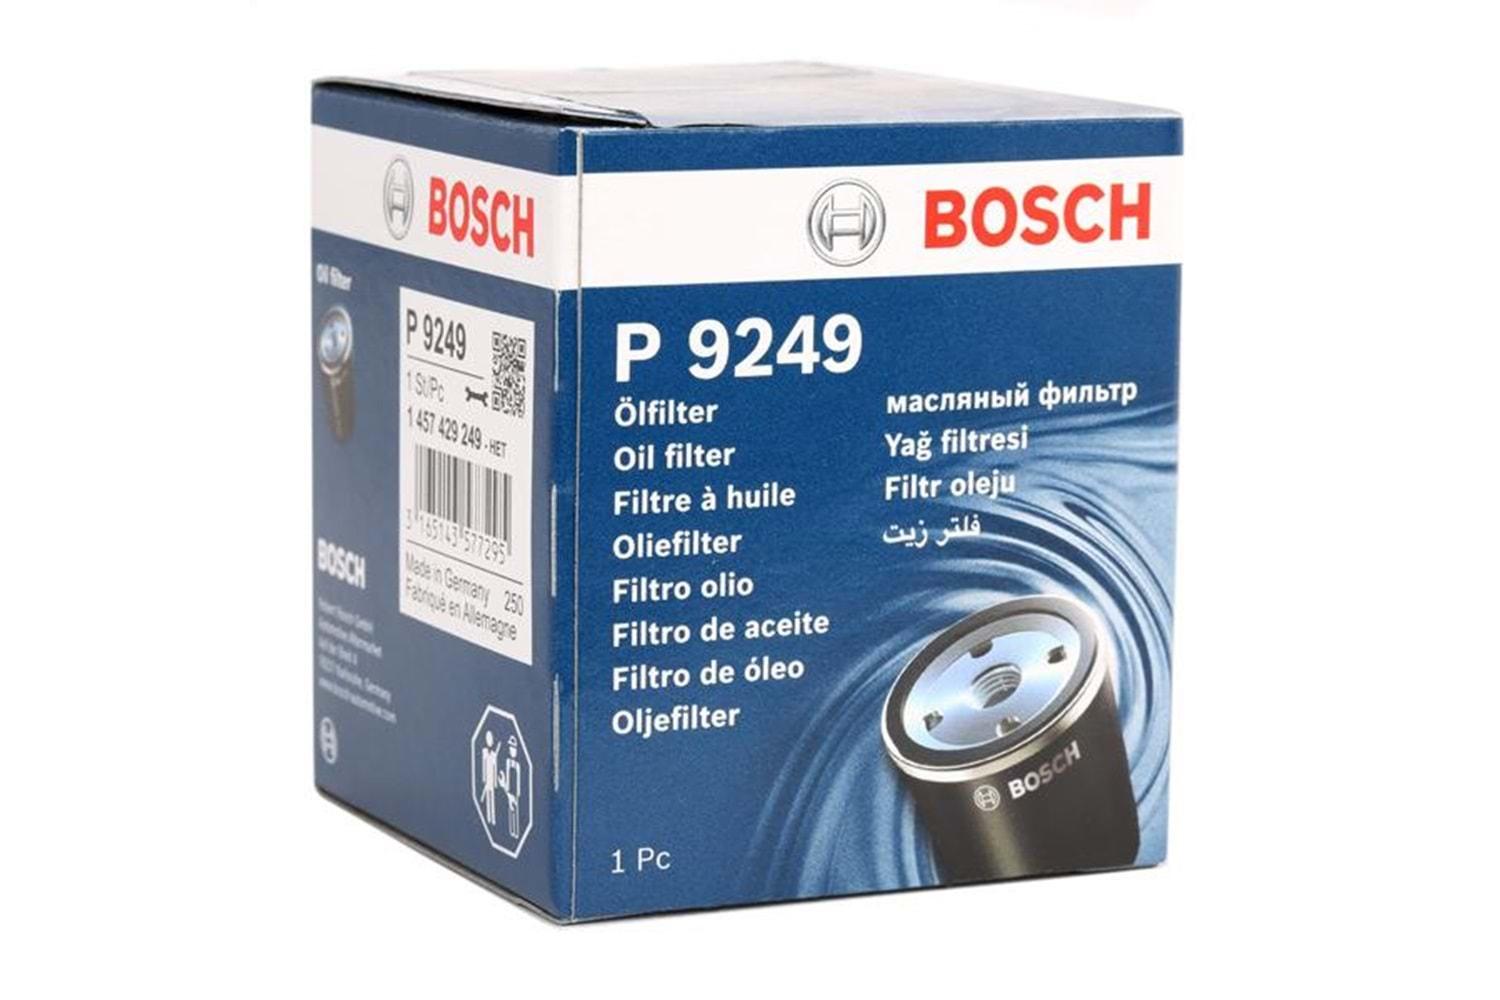 Bosch Yağ Filtresi P9249